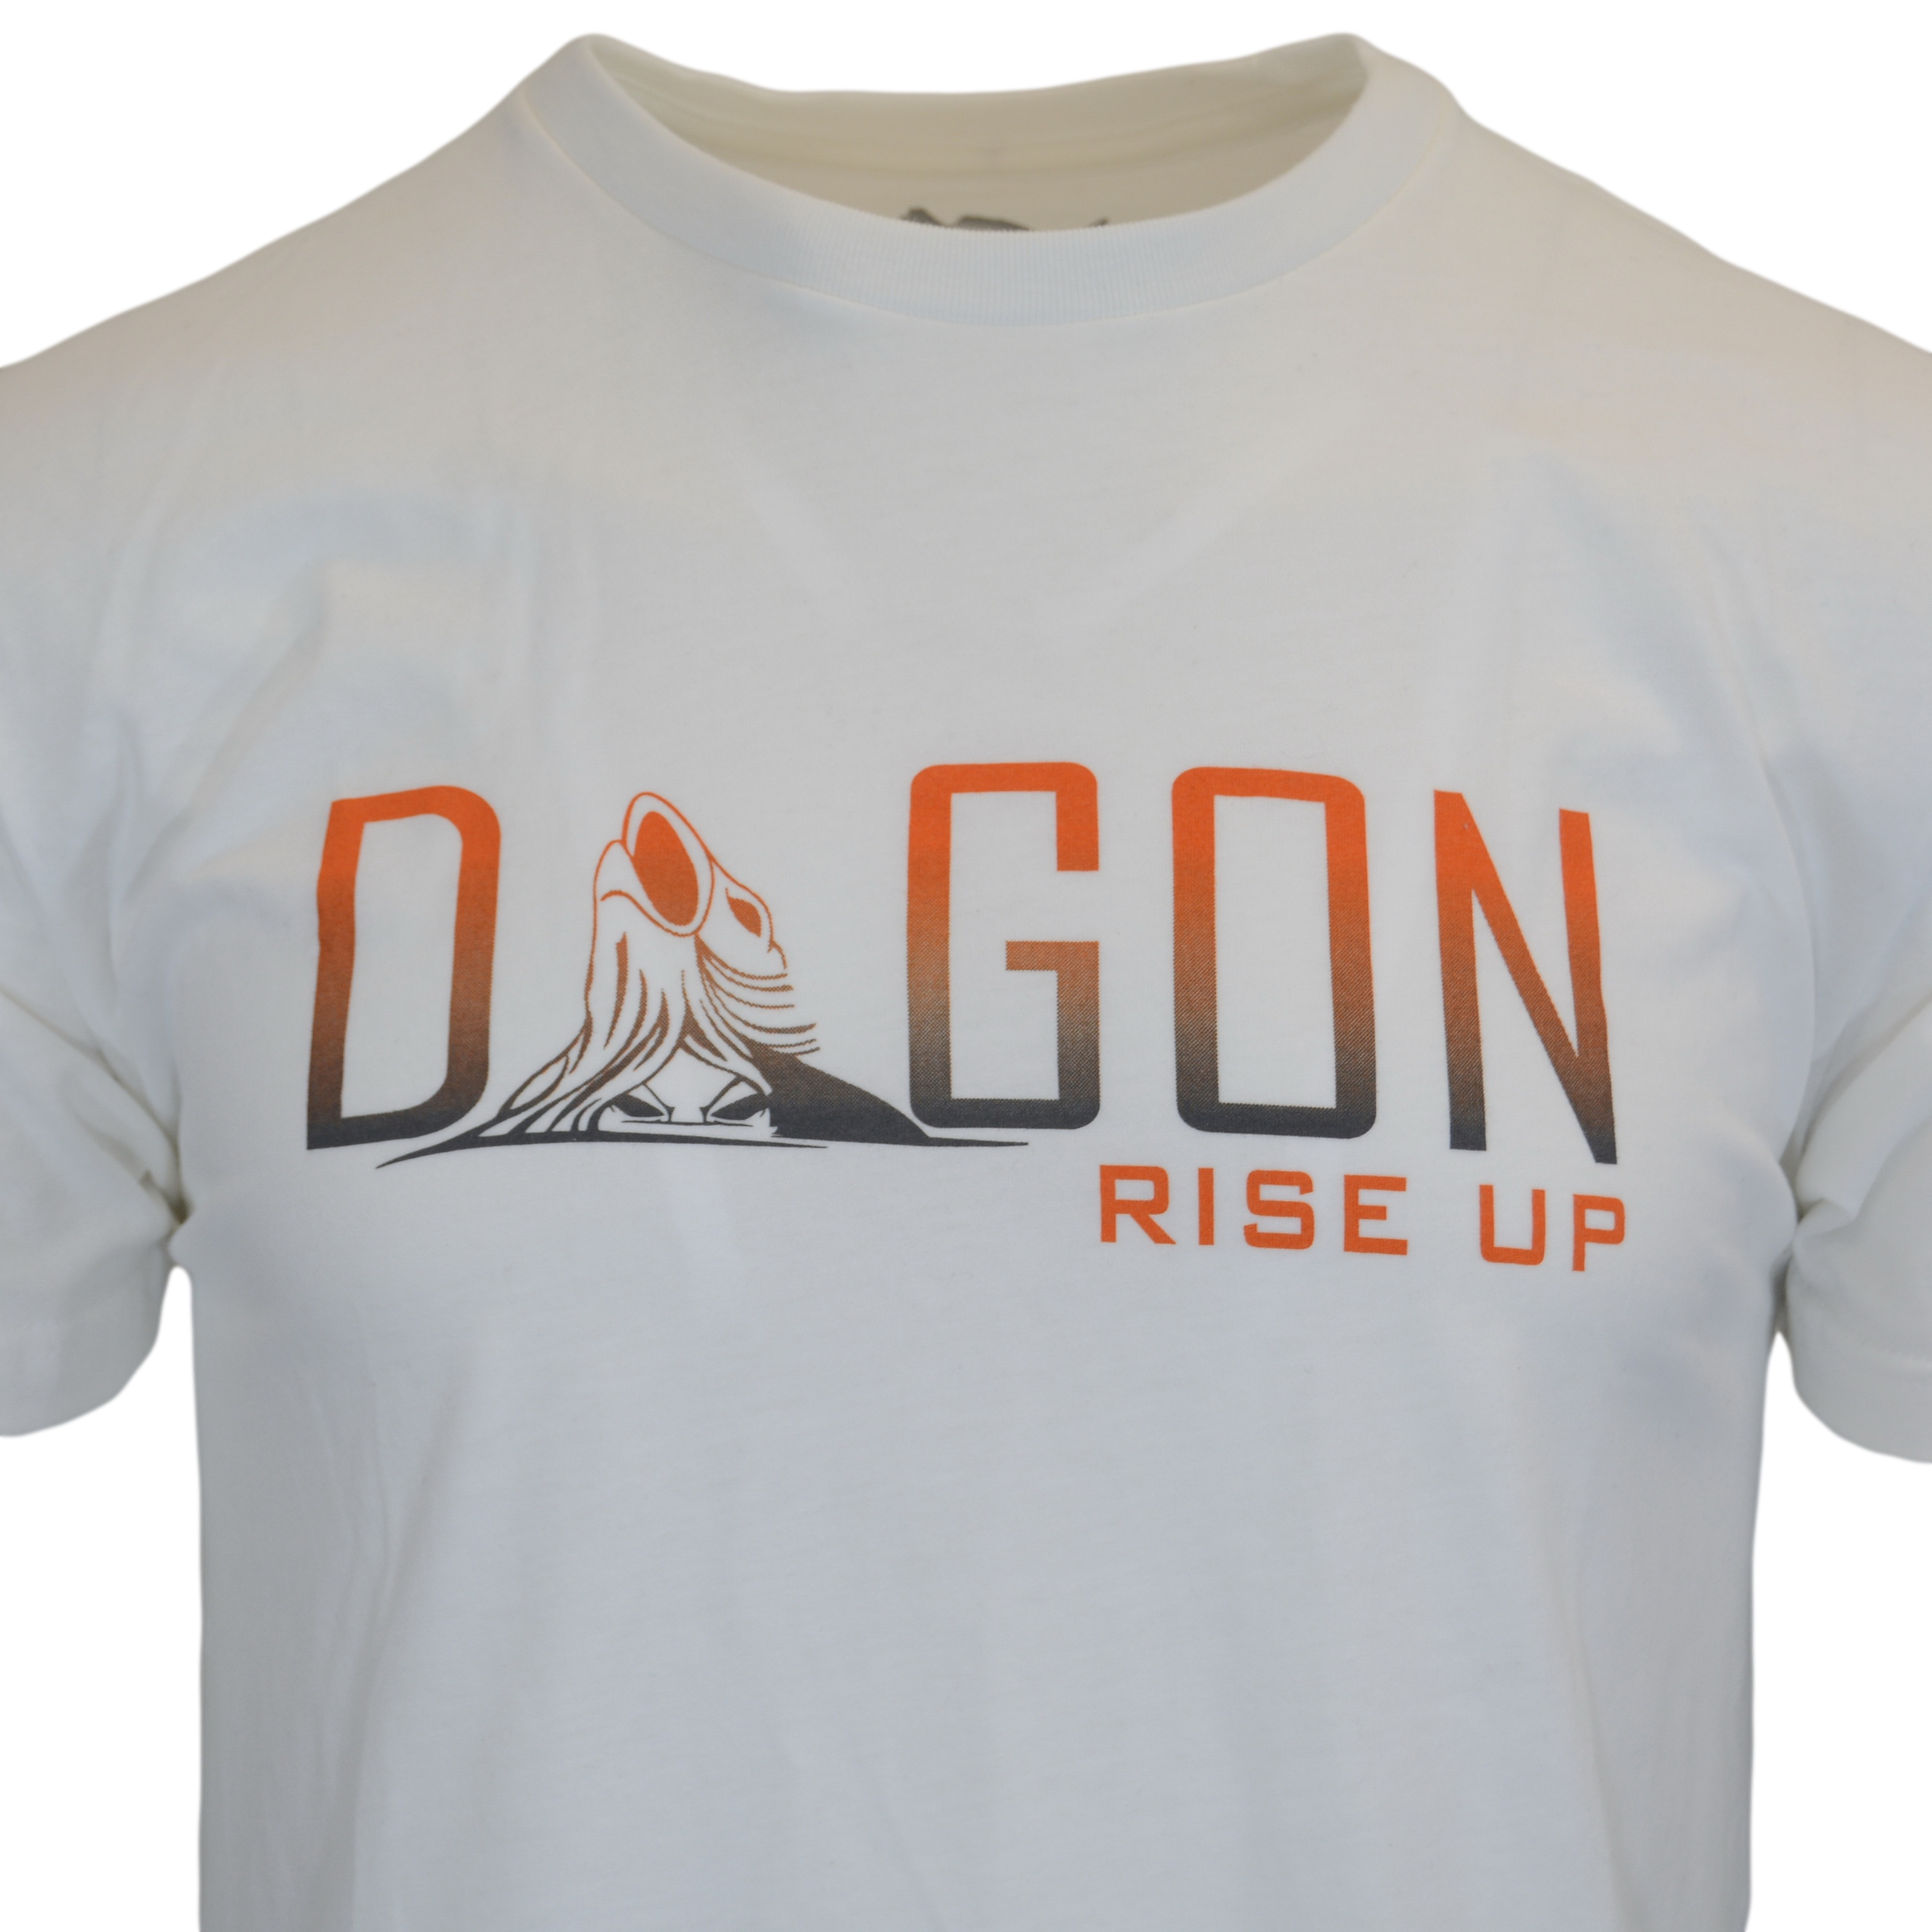 Rise Up T-Shirt detail